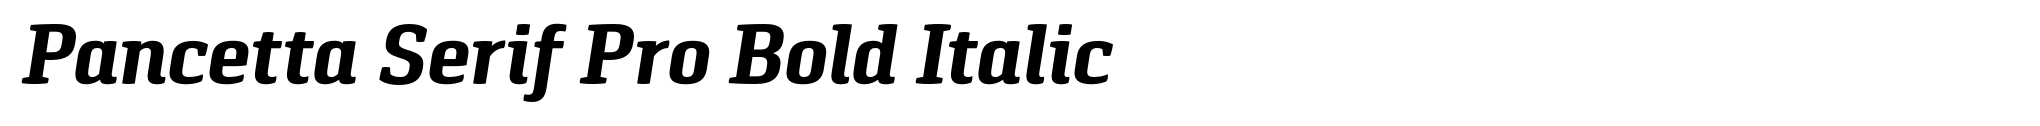 Pancetta Serif Pro Bold Italic image